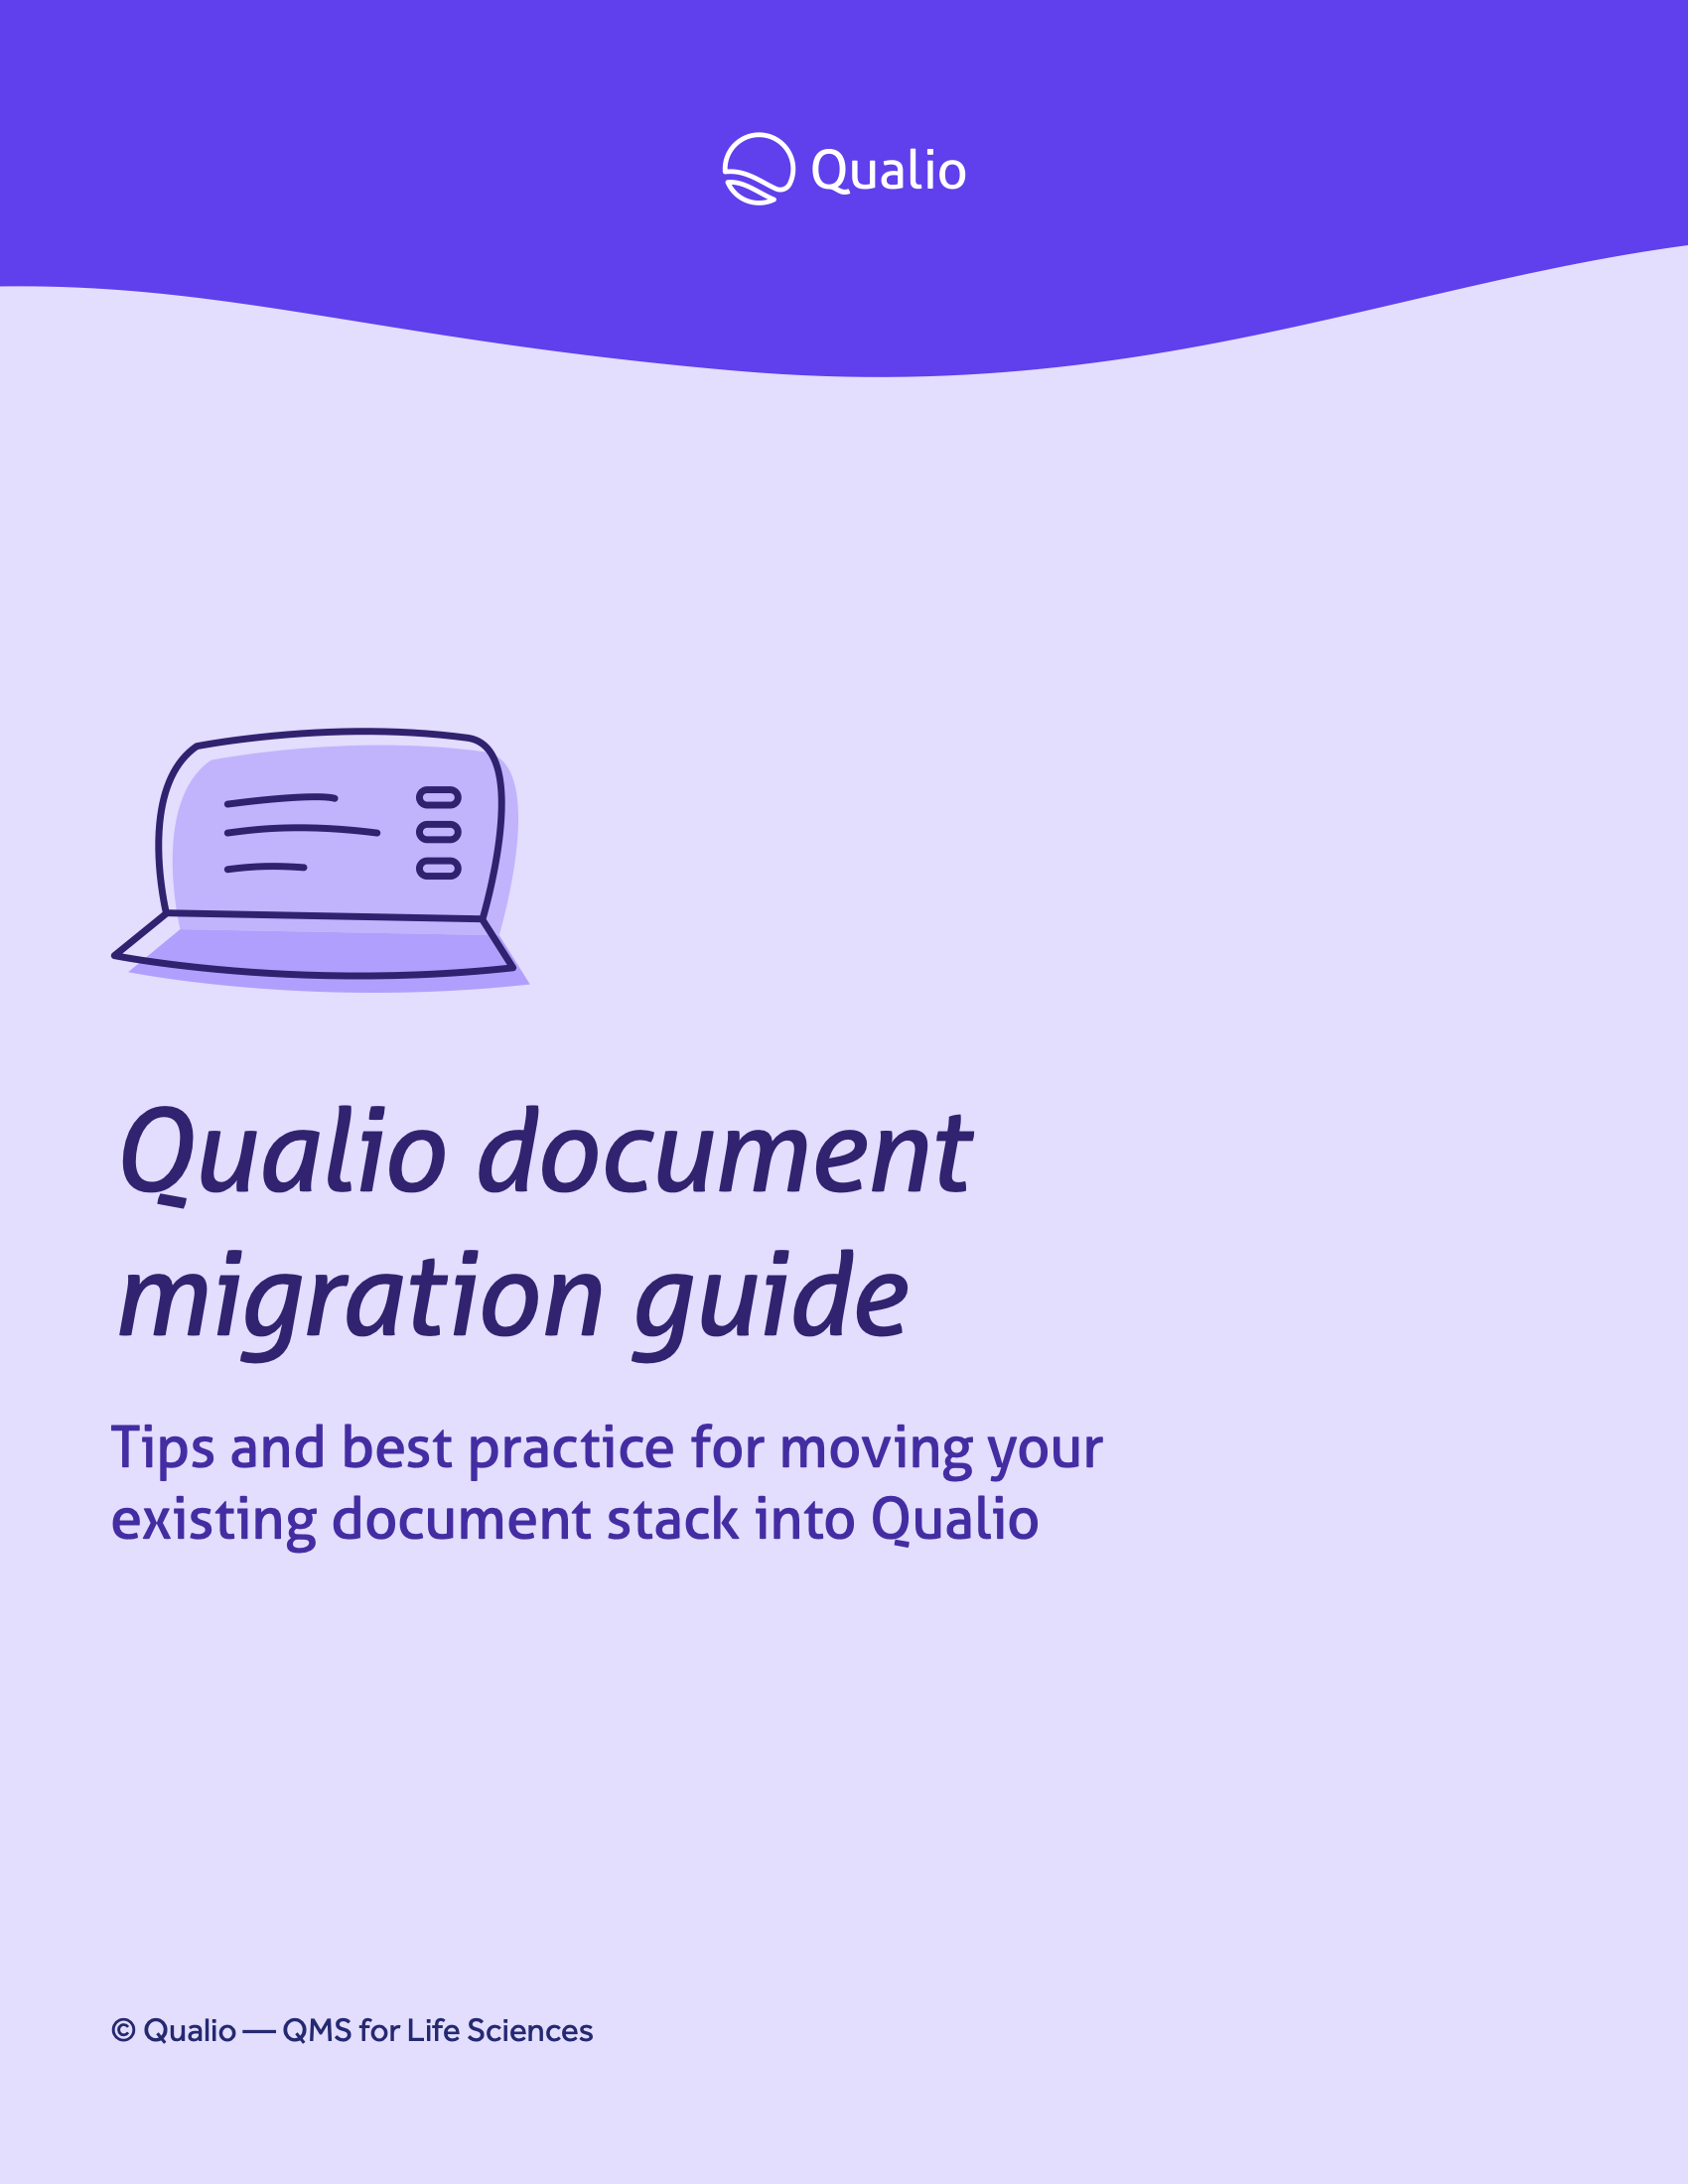 Migration guide